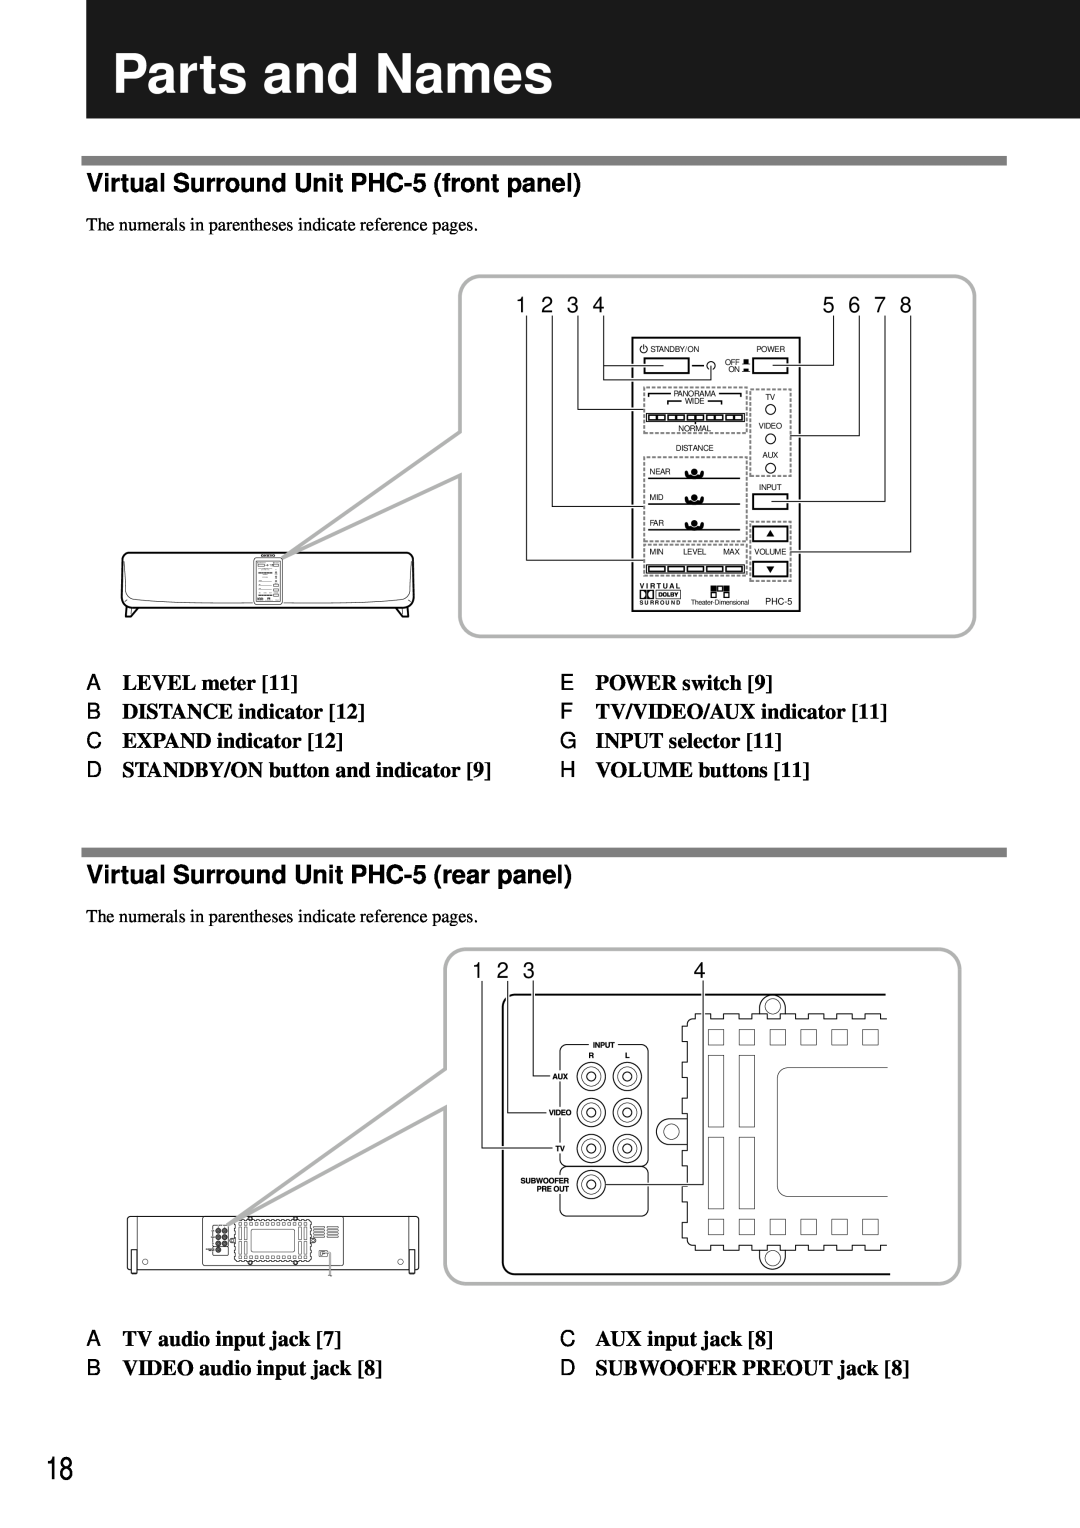 Onkyo instruction manual Parts and Names, Virtual Surround Unit PHC-5front panel, Virtual Surround Unit PHC-5rear panel 